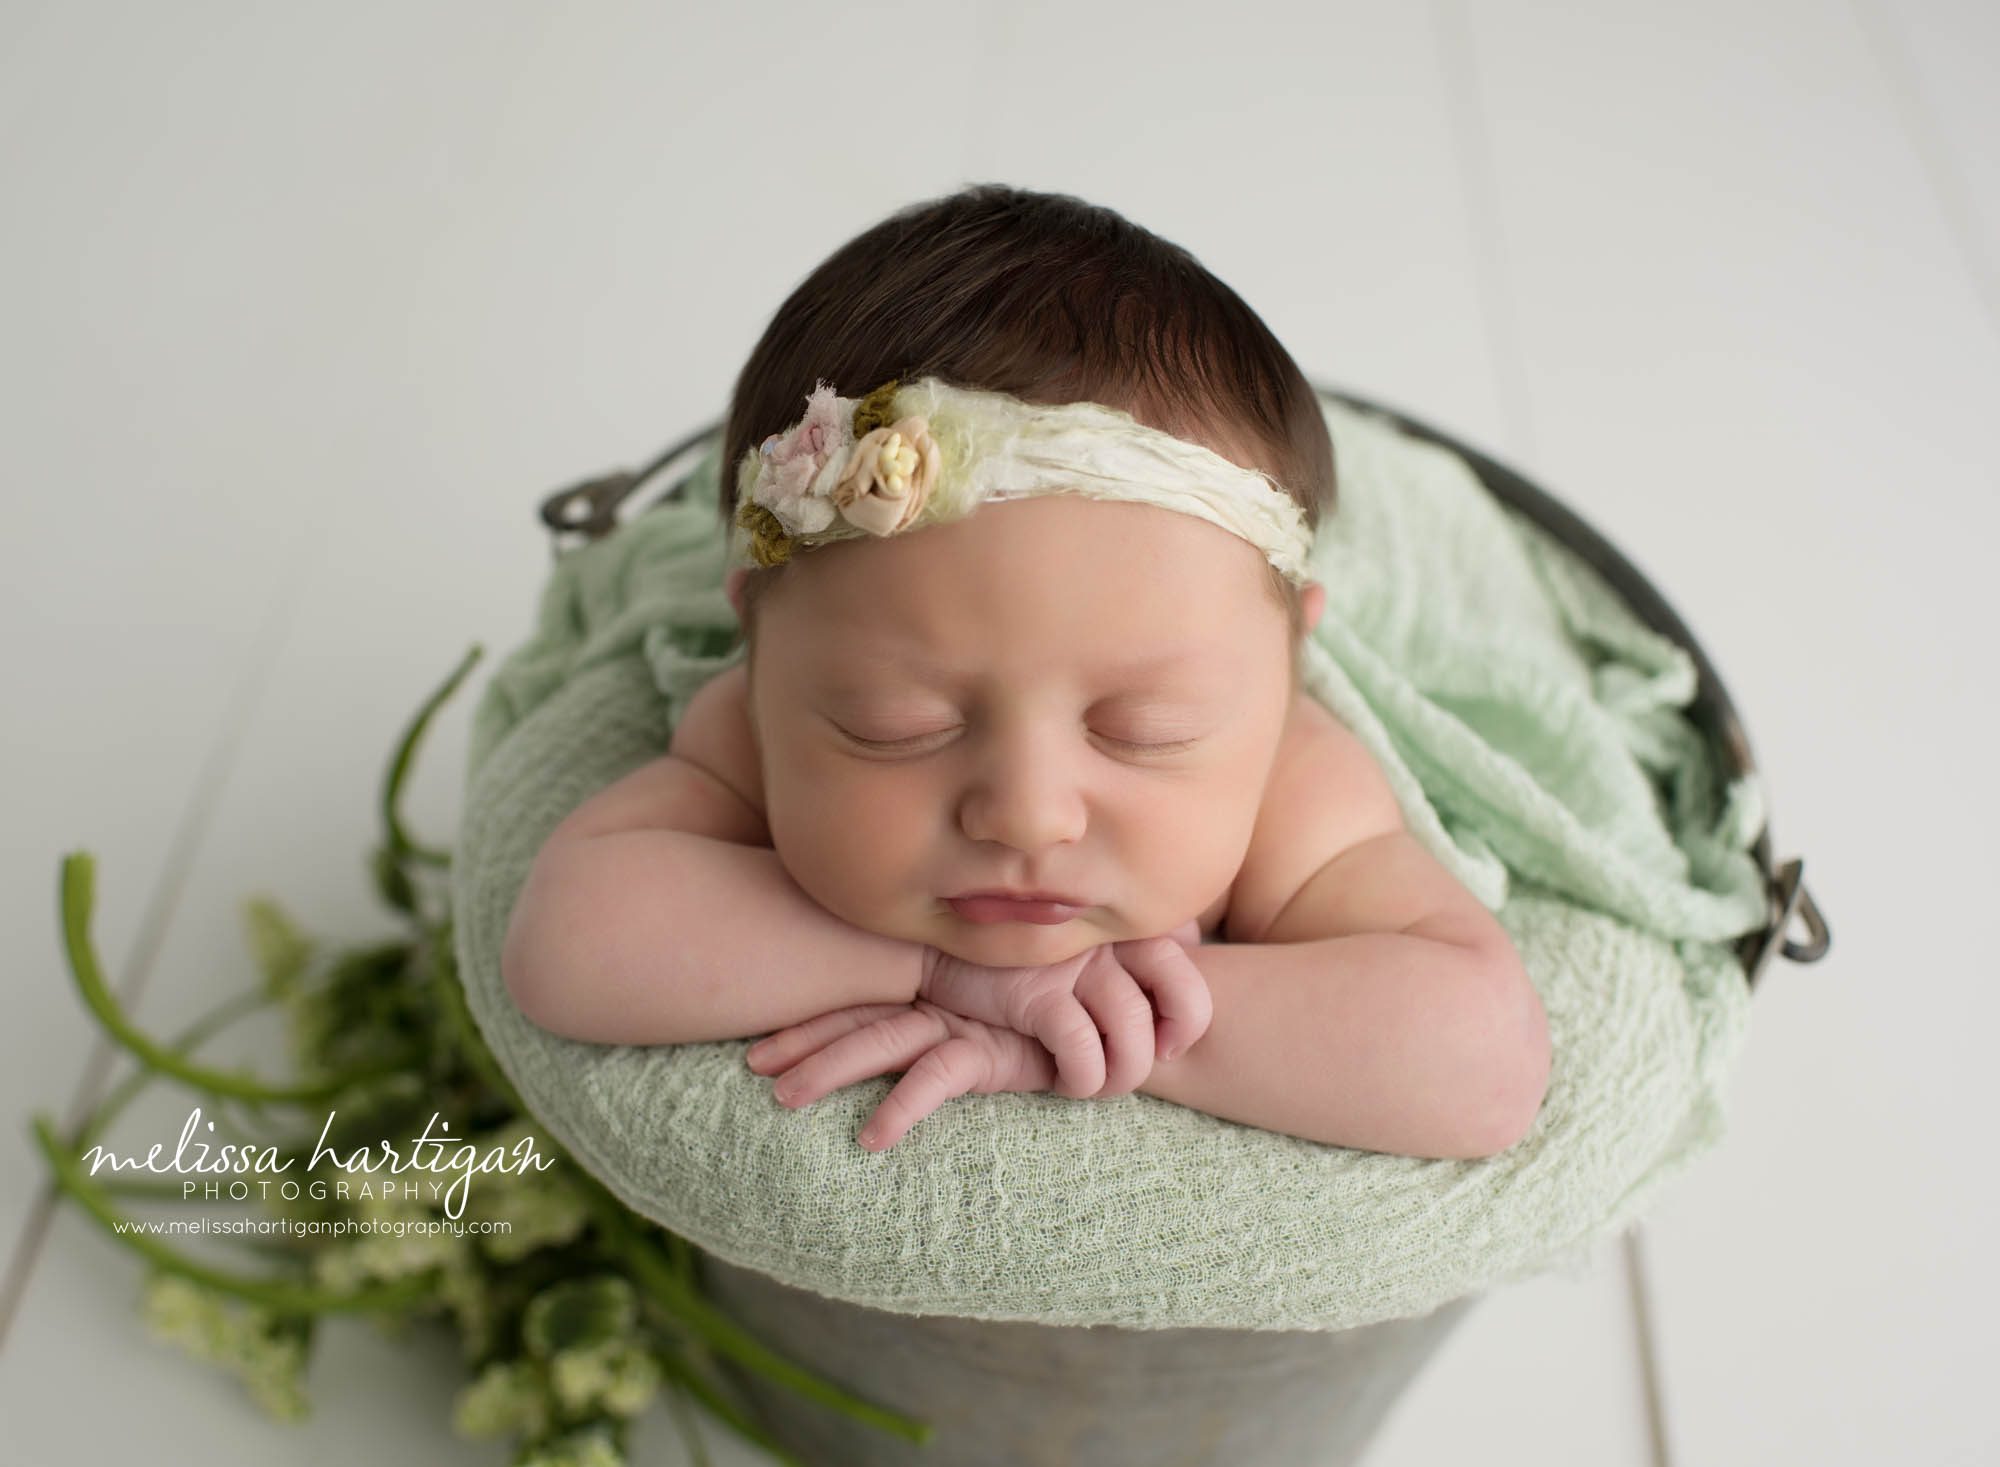 Leila CT Newborn Session baby girl sleeping in metal bucket with green blanket